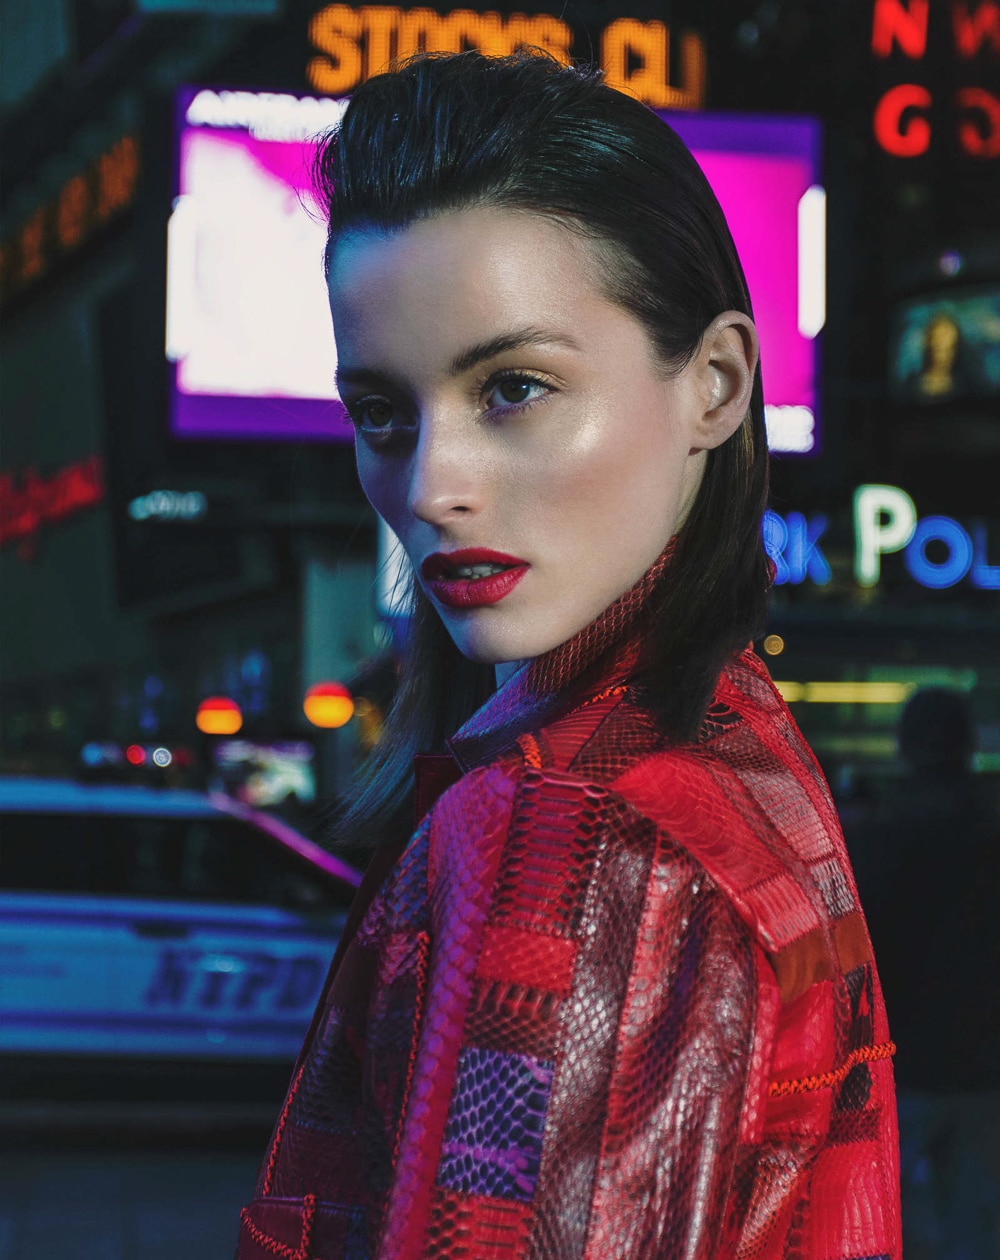 Harper’s Bazaar Hong Kong May 2016 Flavia Lucini by Elio Nogueira